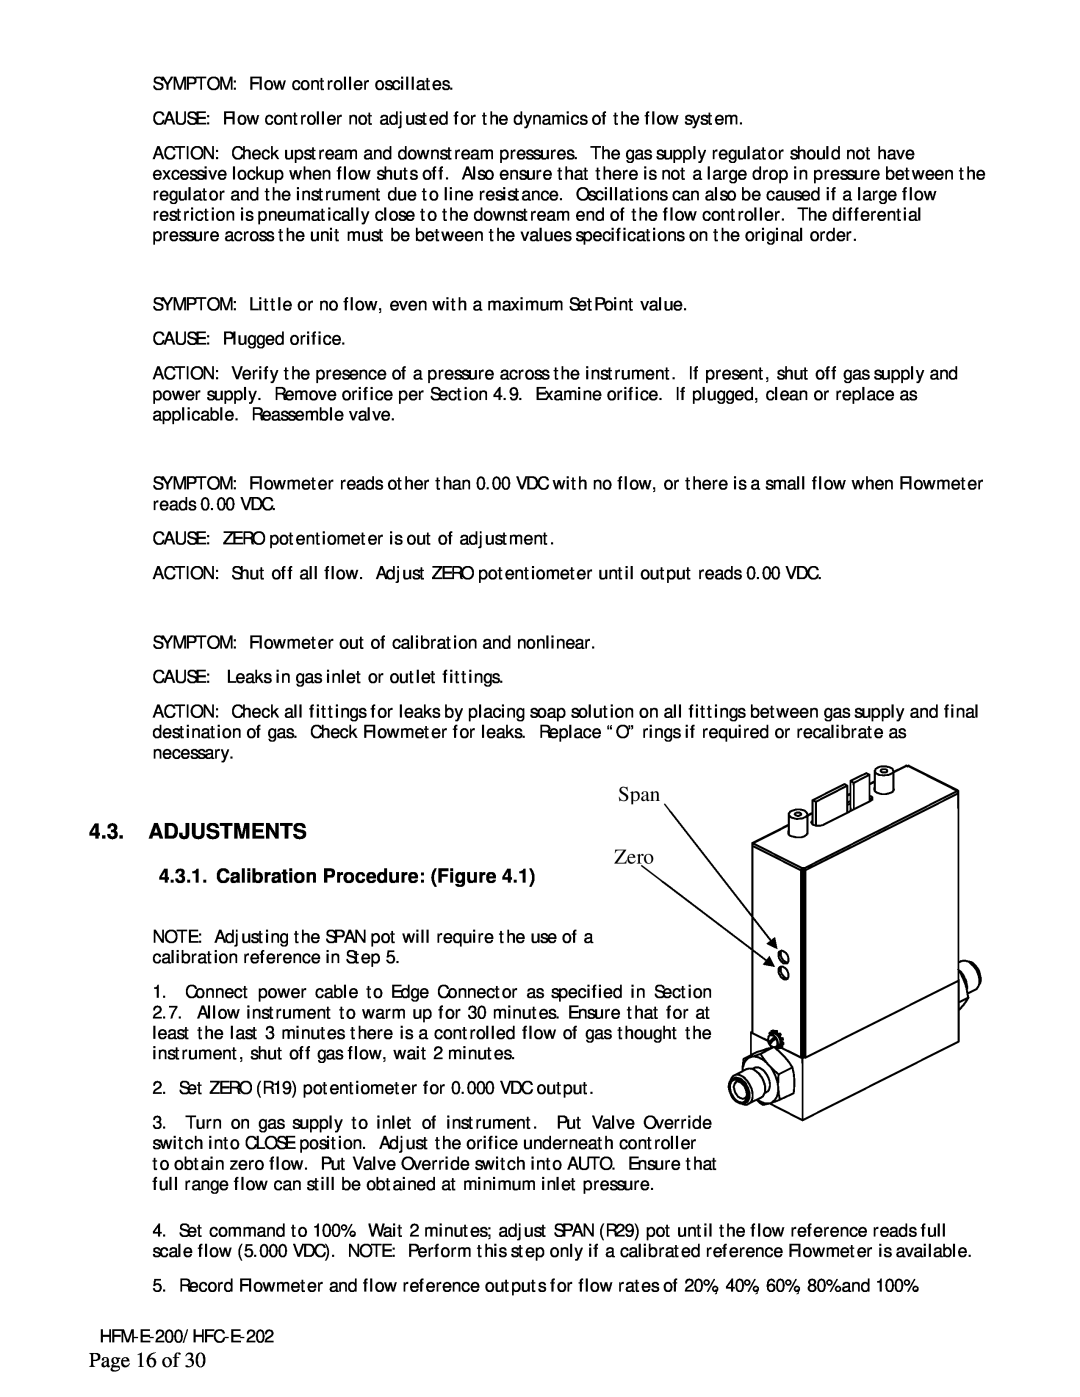 Teledyne HFC-E-202, HFM-E-200 instruction manual Adjustments, Span, Zero, Page 16 of, Calibration Procedure Figure 